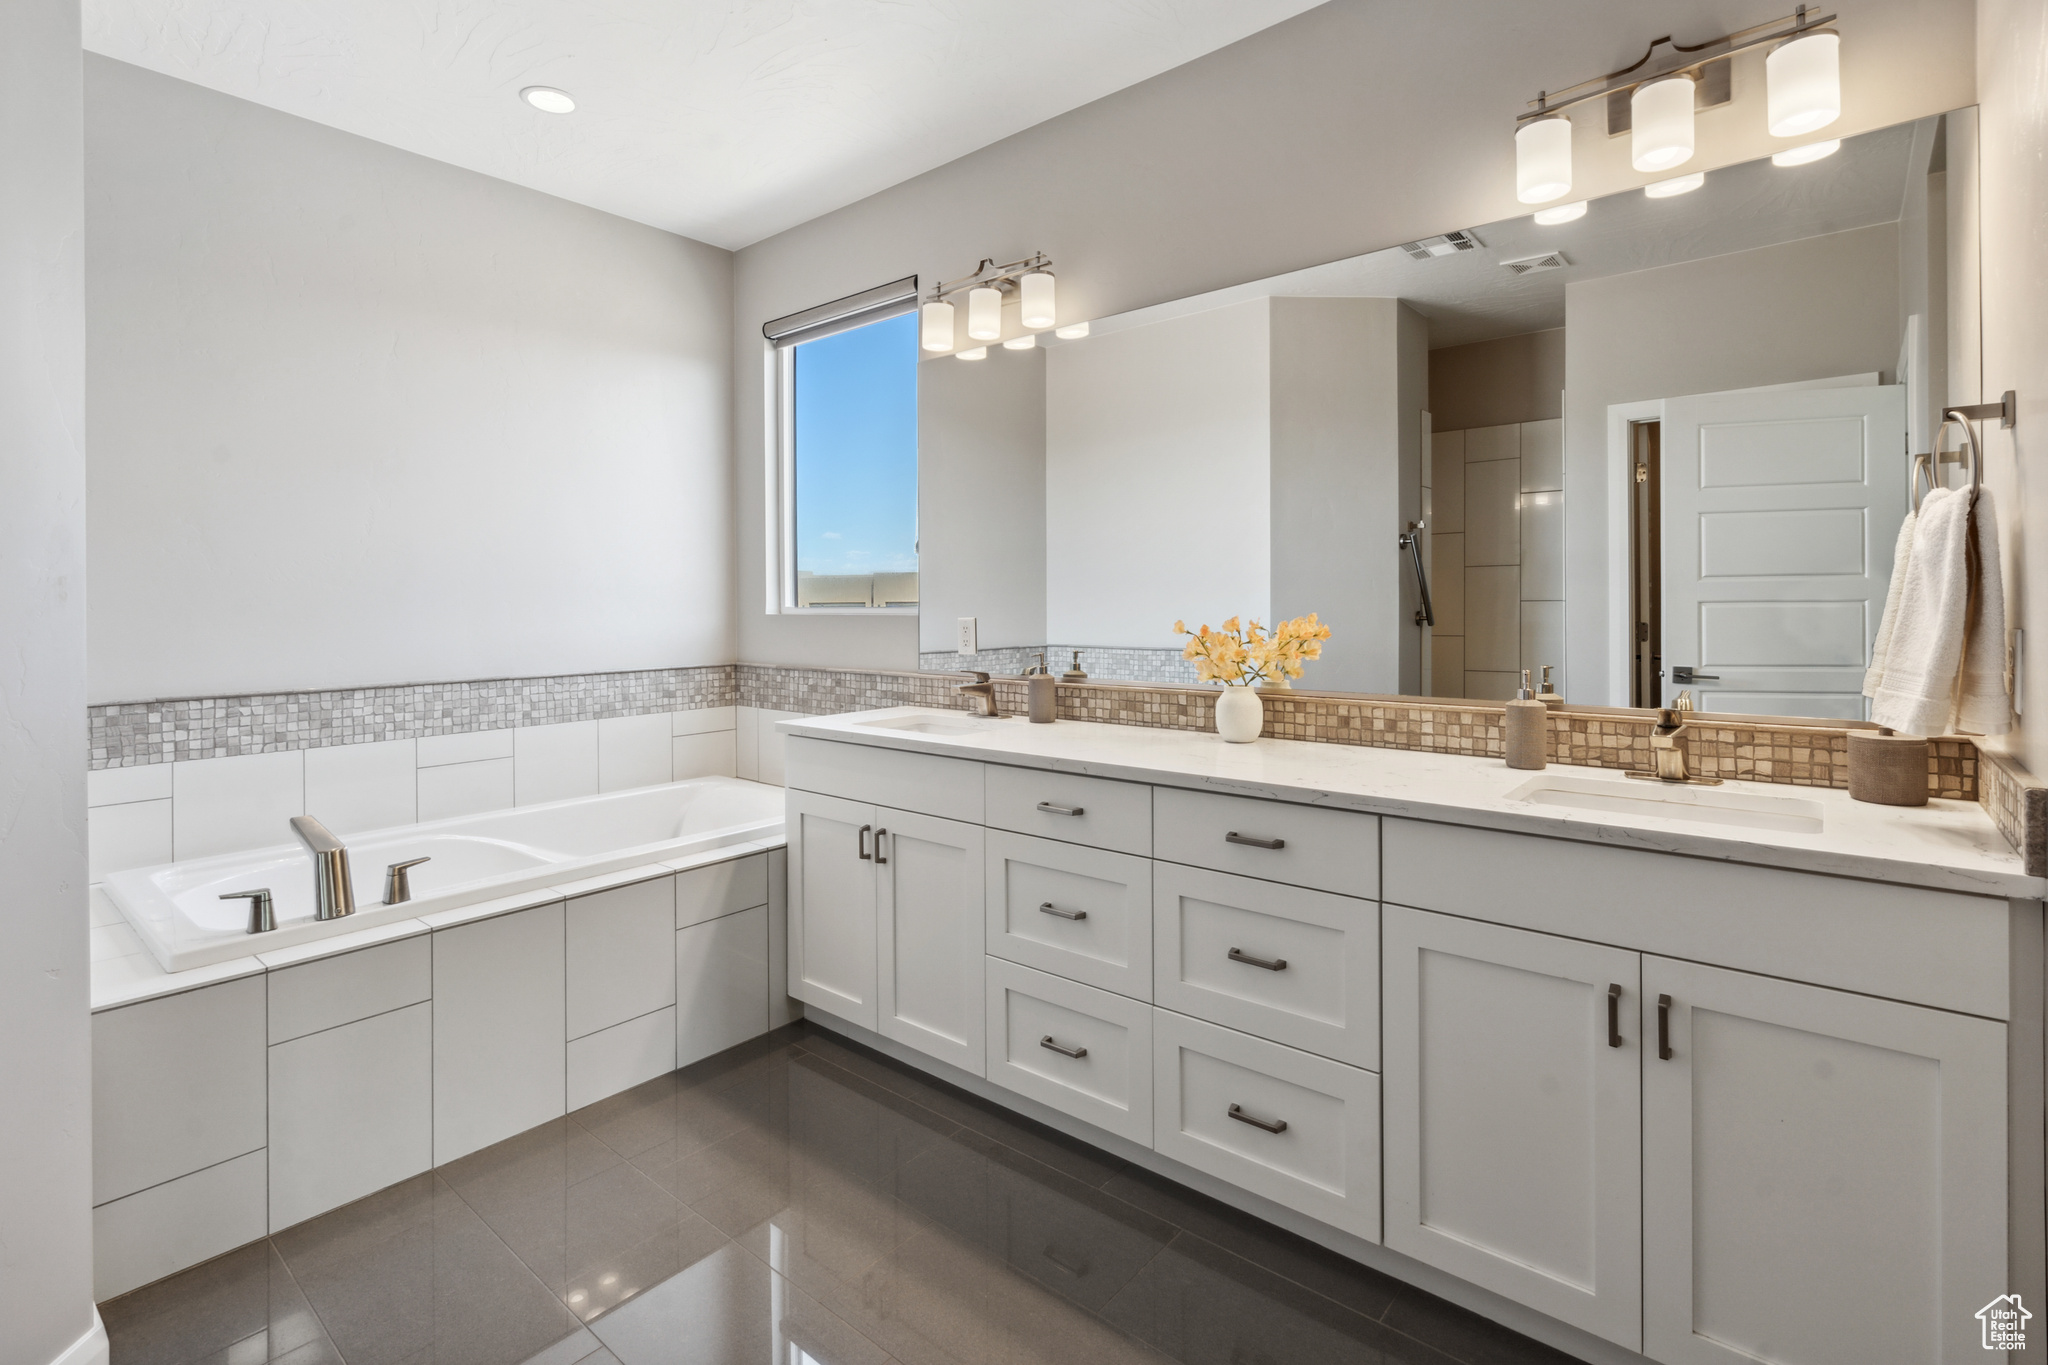 Bathroom featuring oversized vanity, tiled tub, tile floors, and dual sinks